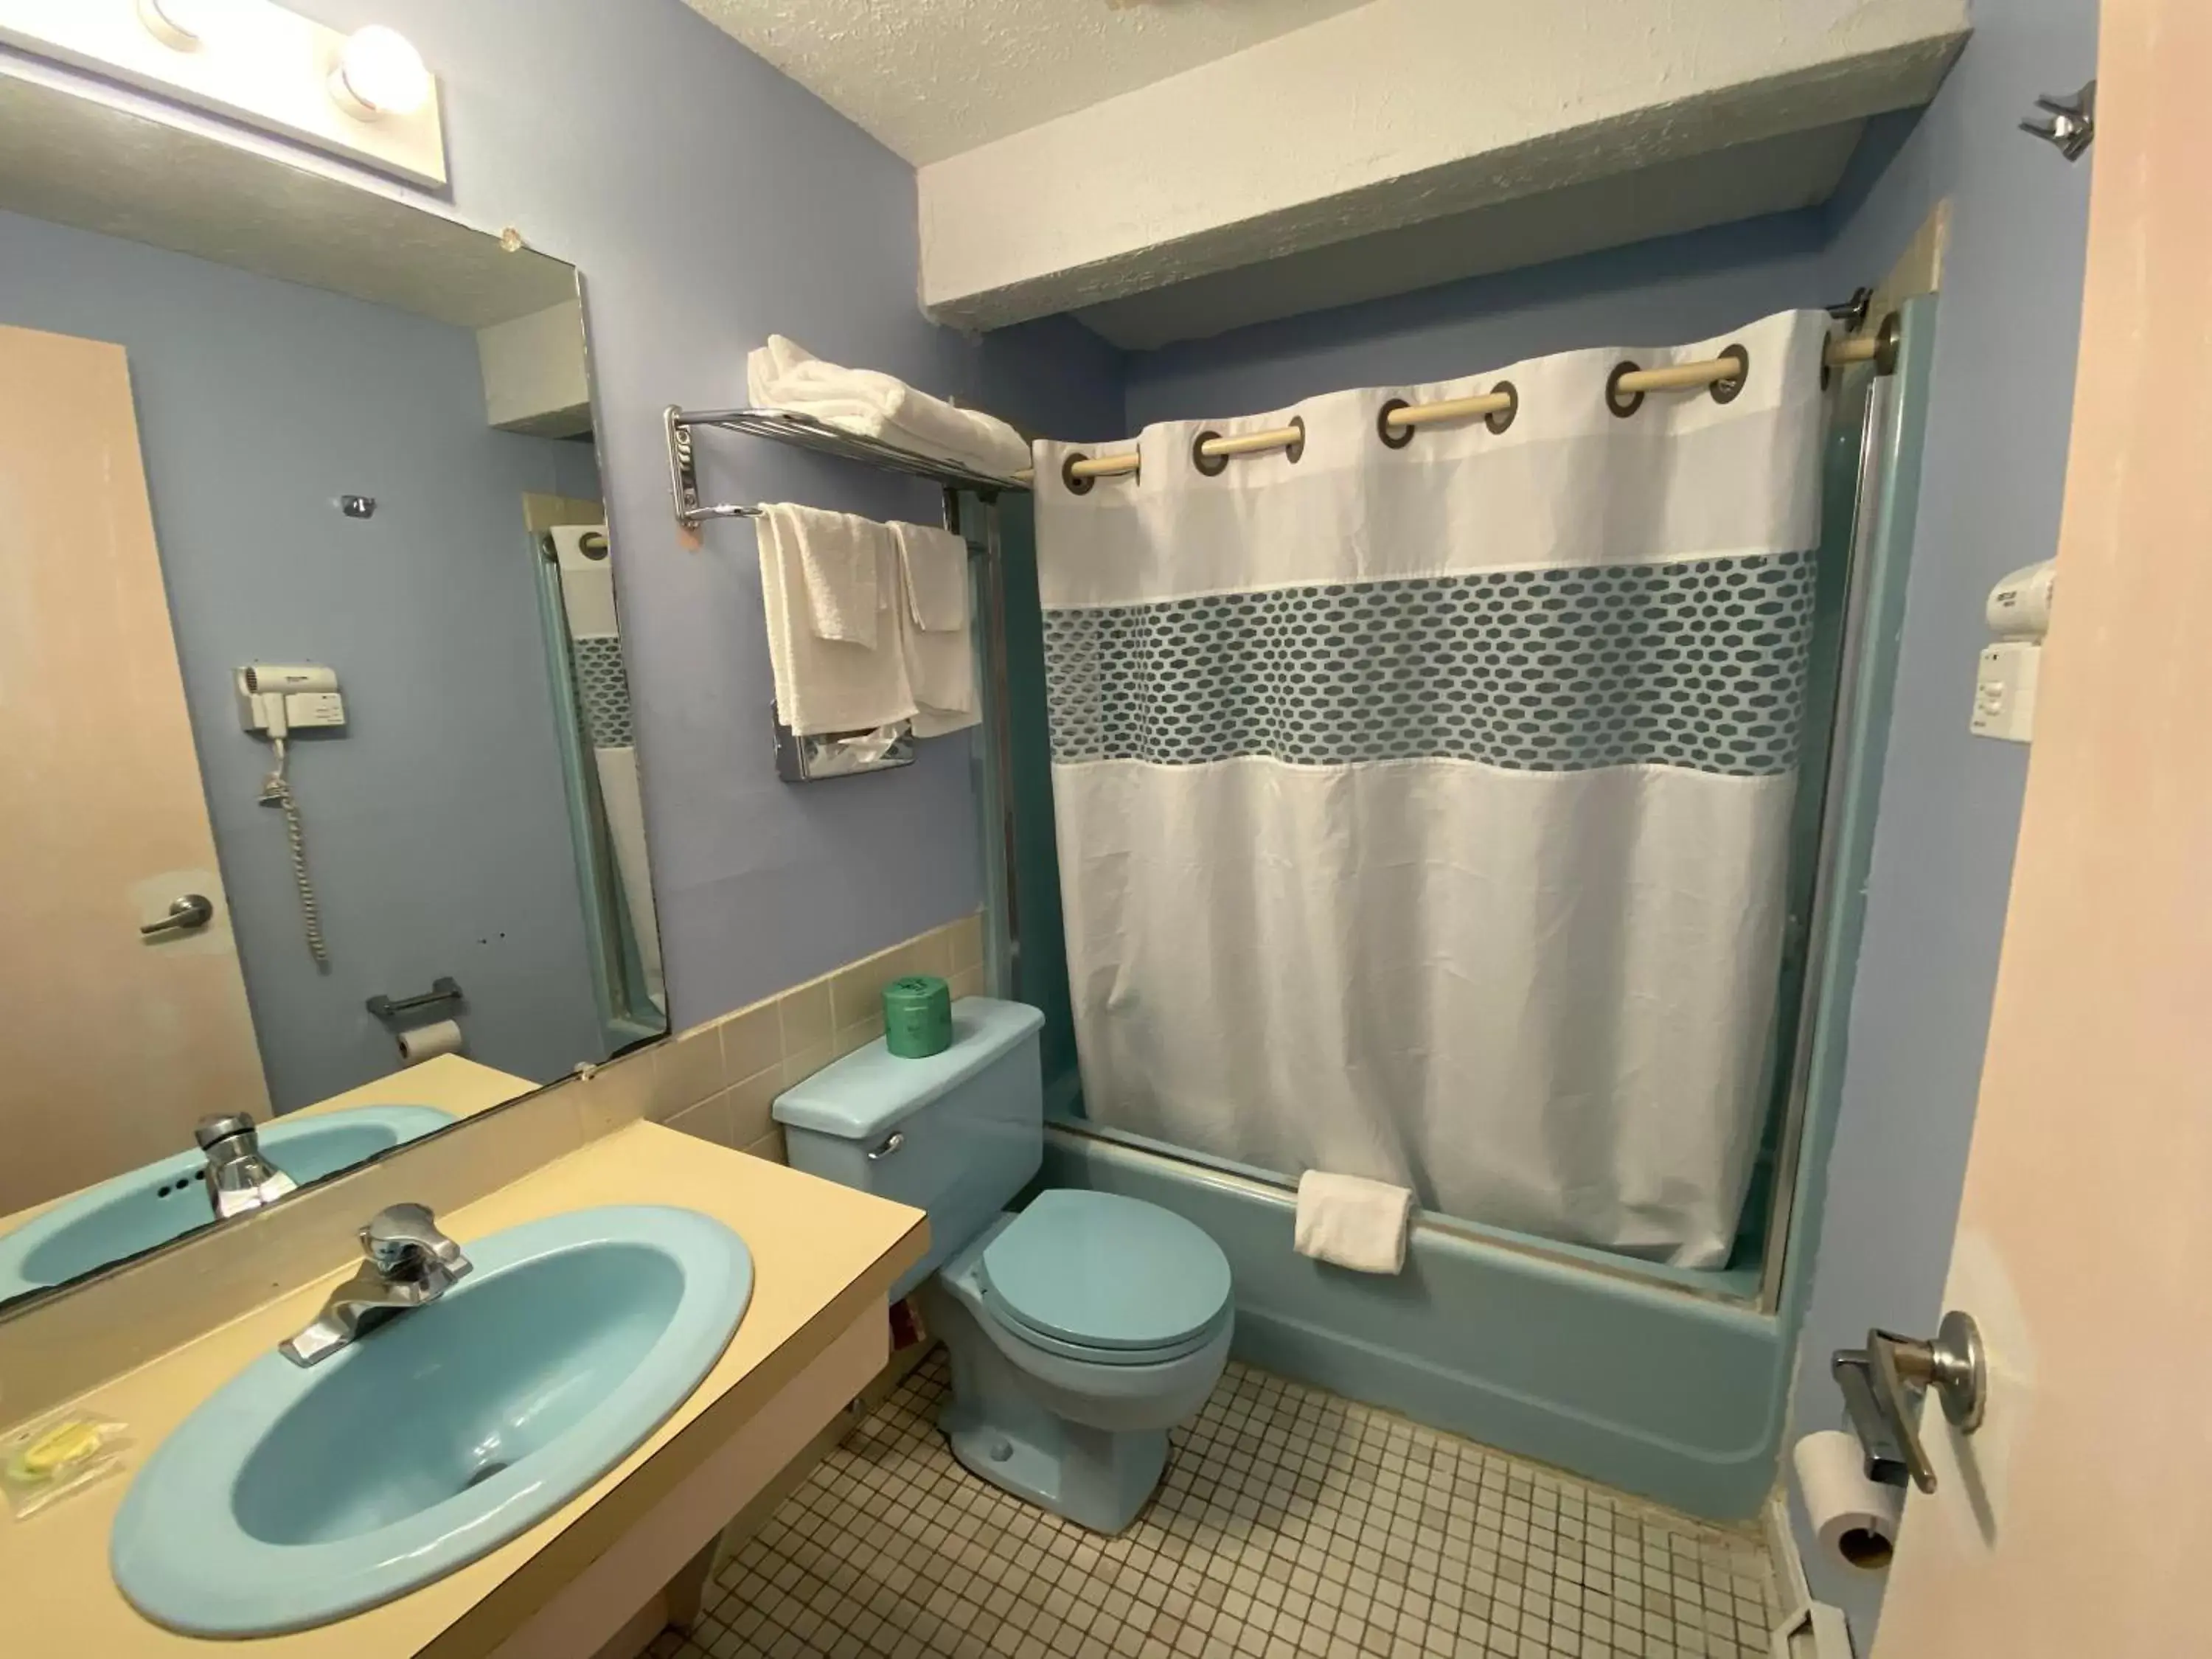 Bathroom in Economy Lodge 682 Main St Sturbridge